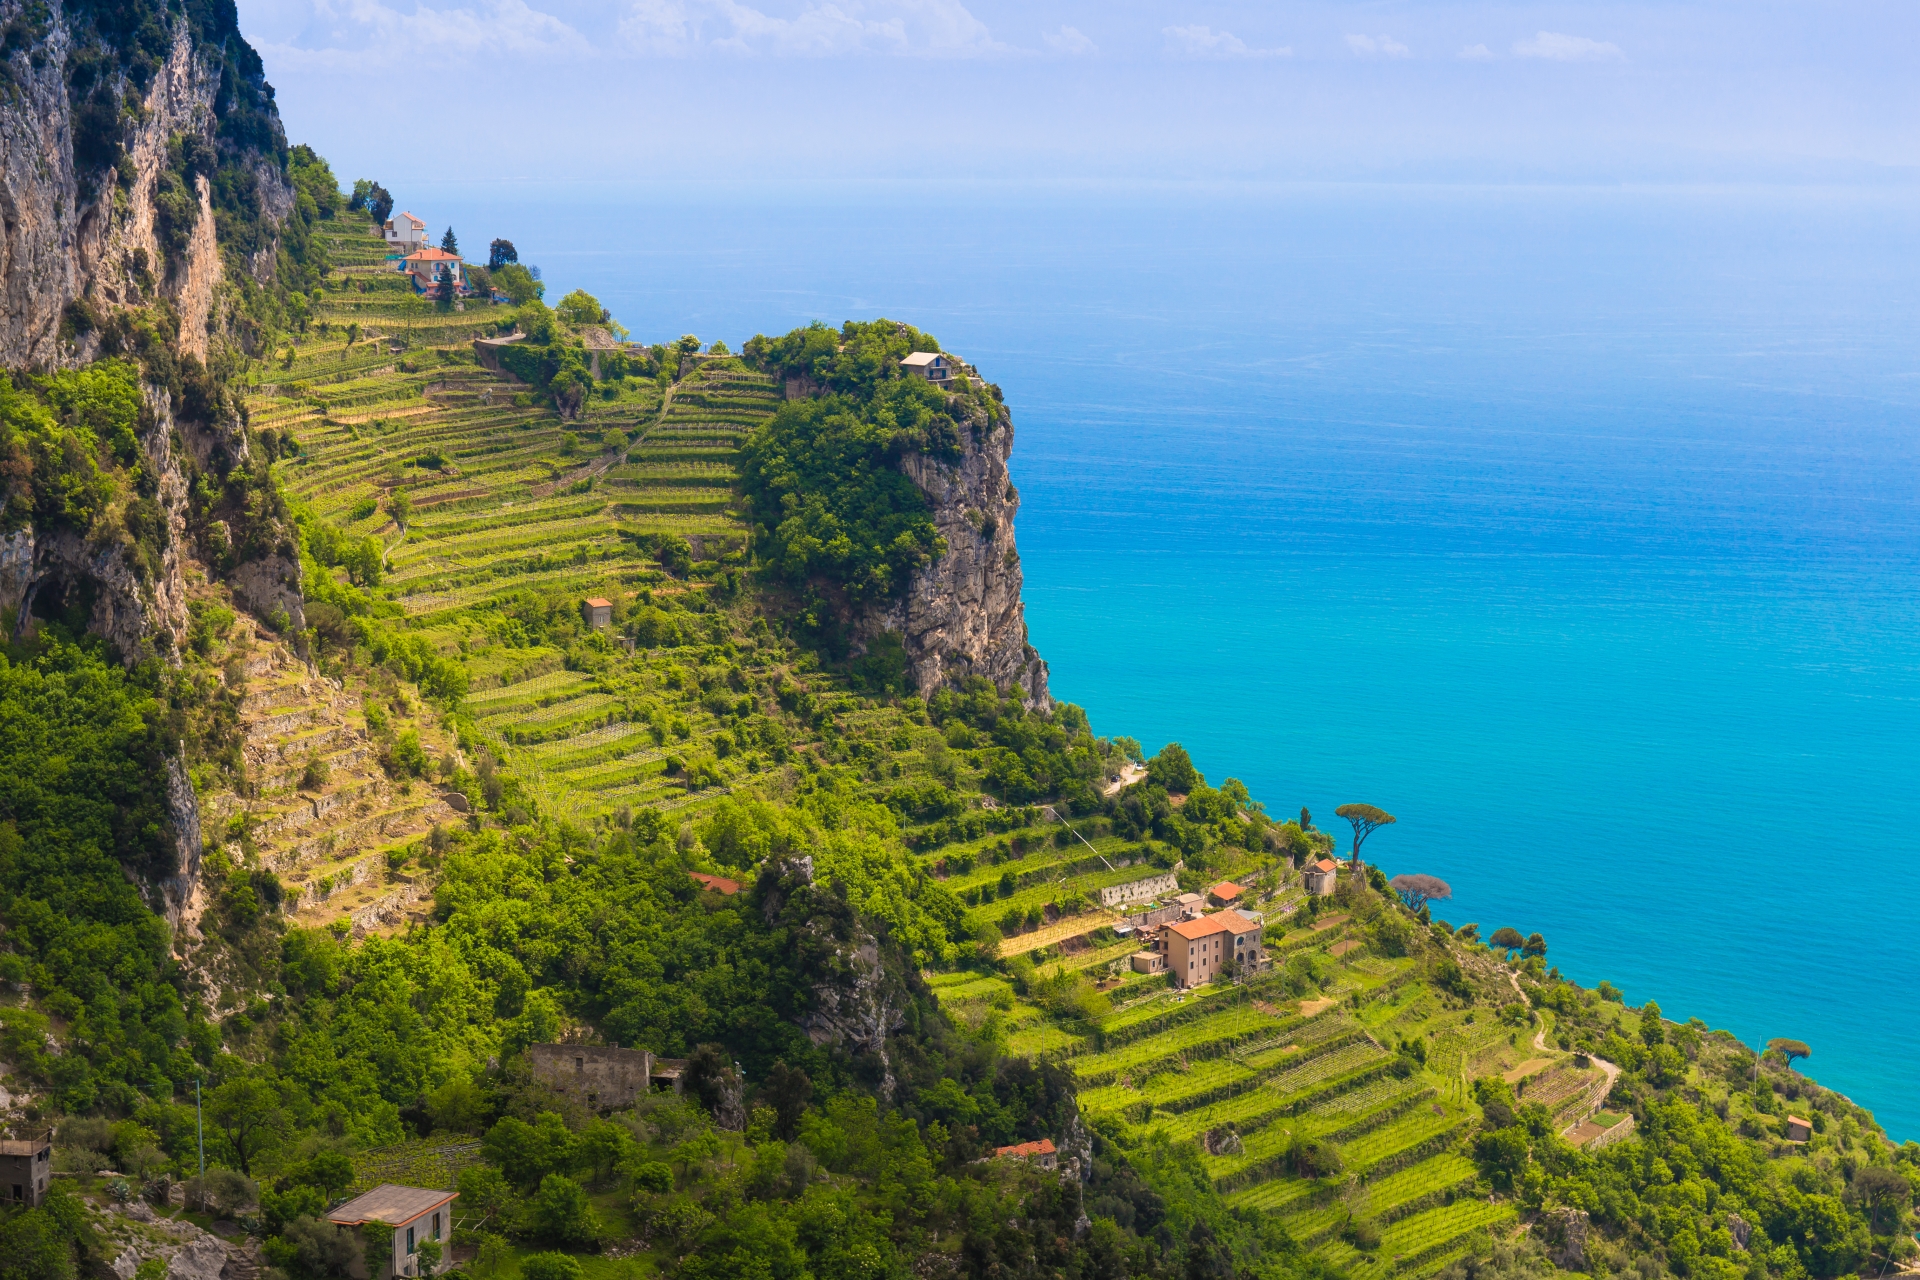 Lemon groves - Honeymoon on the Amalfi Coast